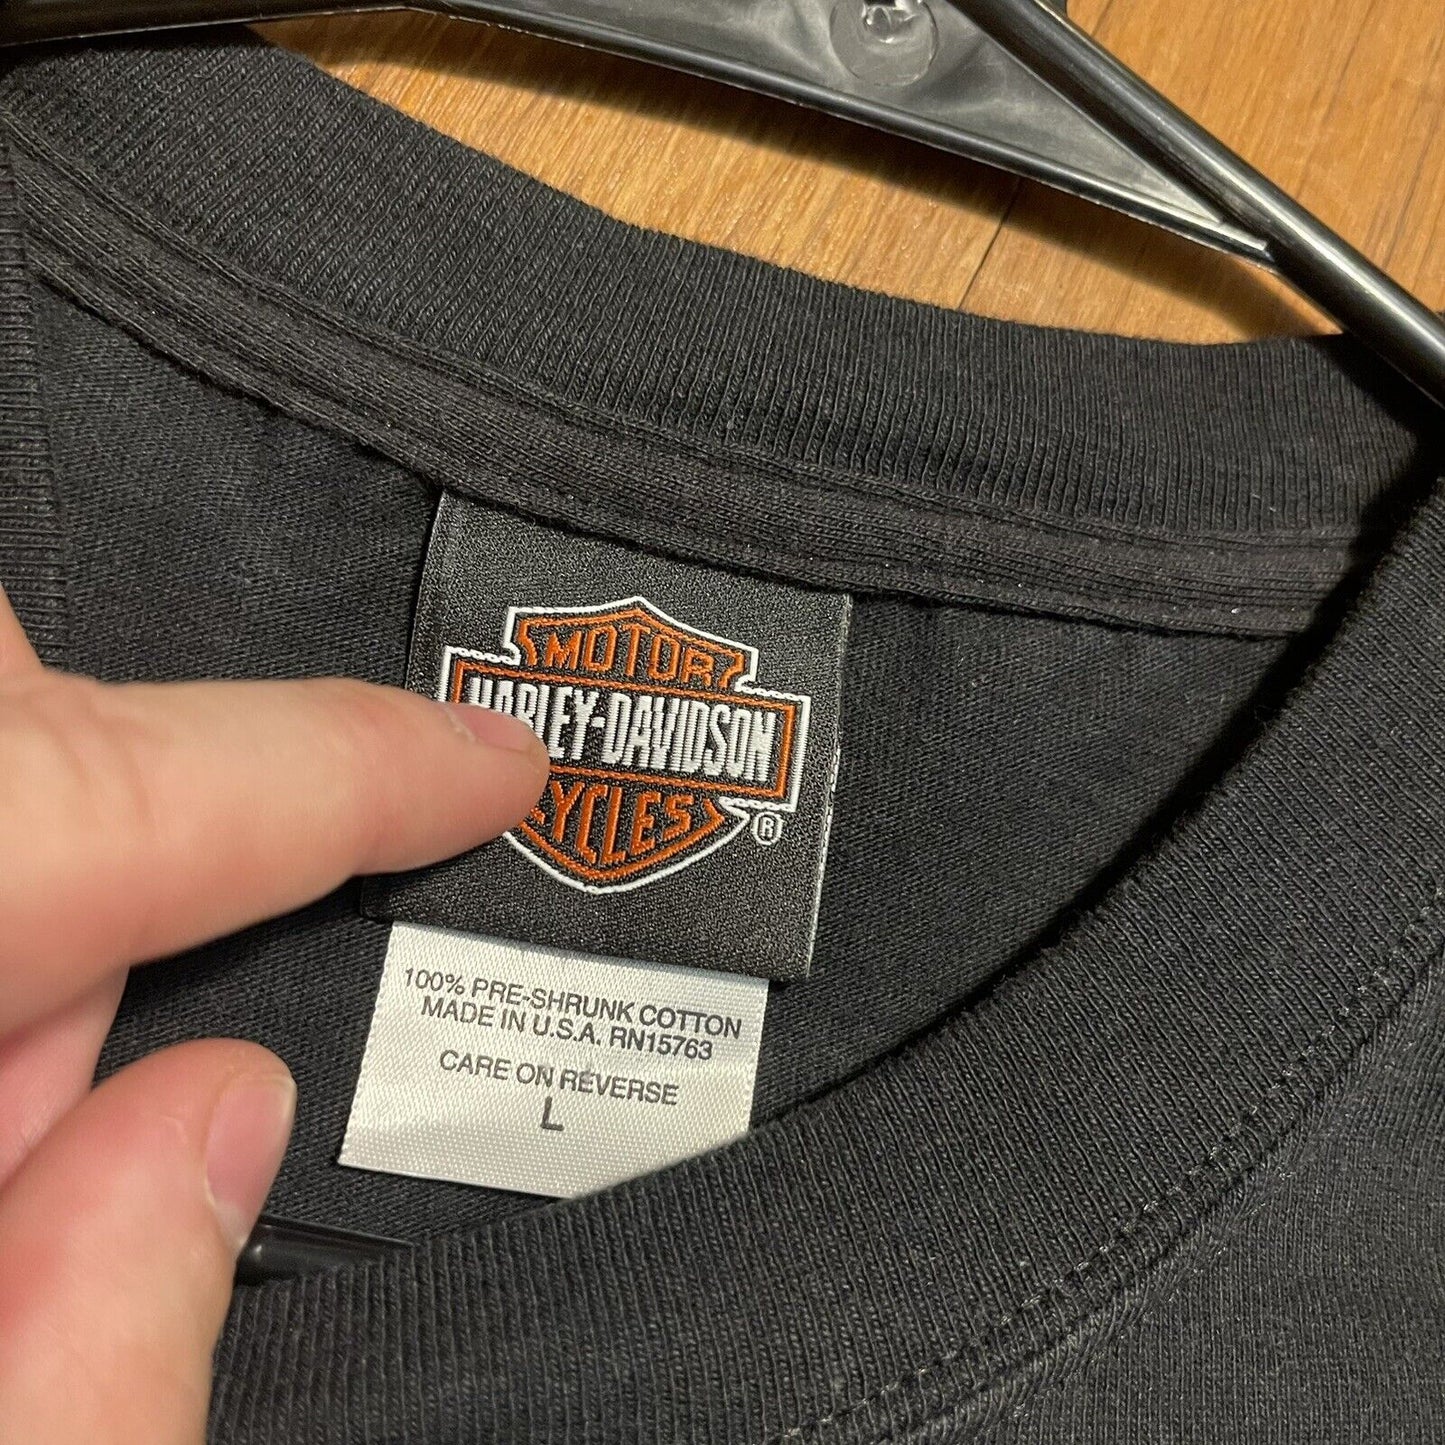 Harley Davidson T Shirt Size Large